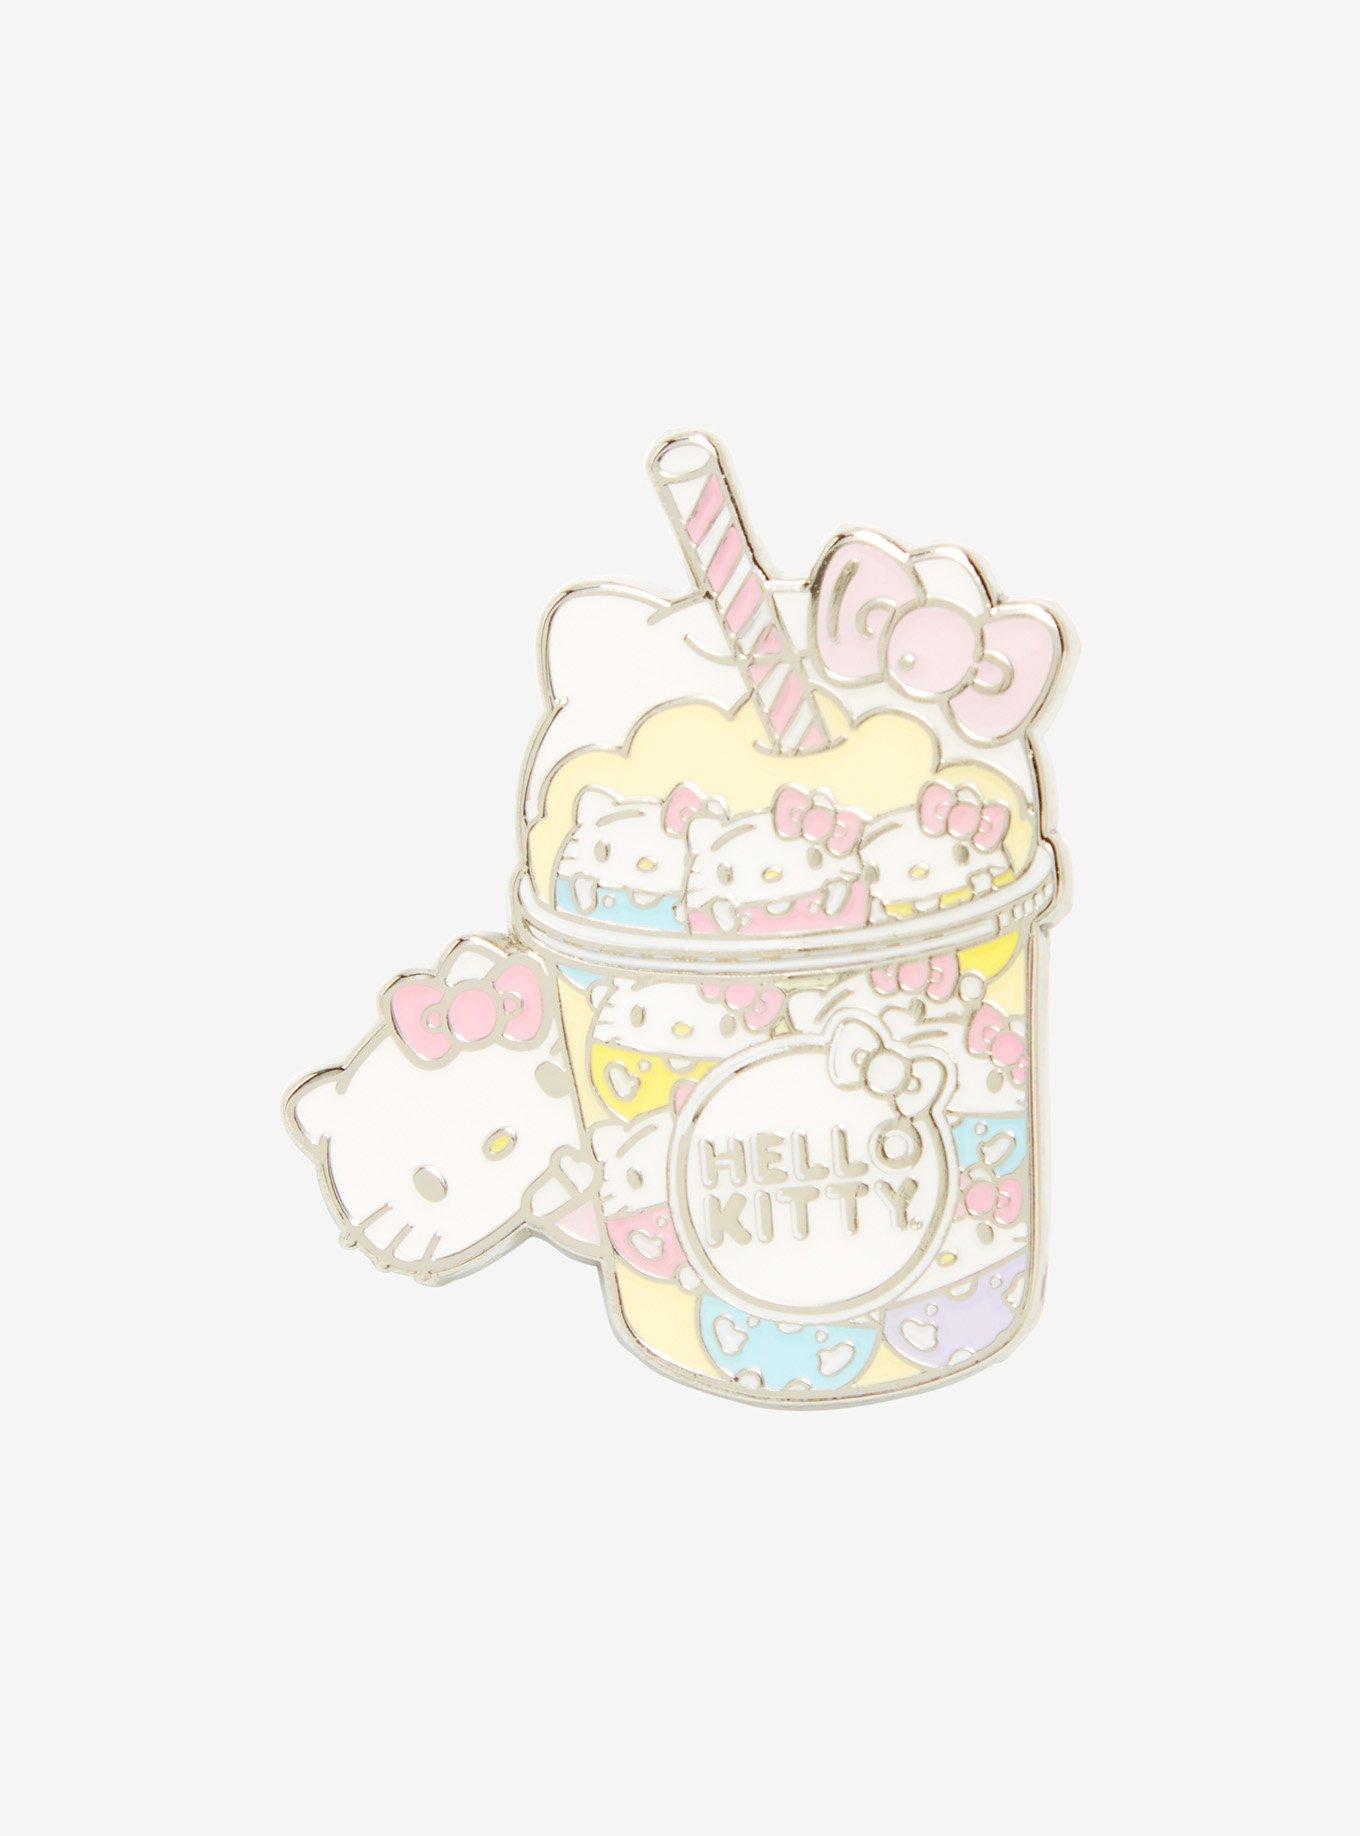 Hello Kitty Boba Drink Enamel Pin Kawaii NEW Loungefly Sanrio